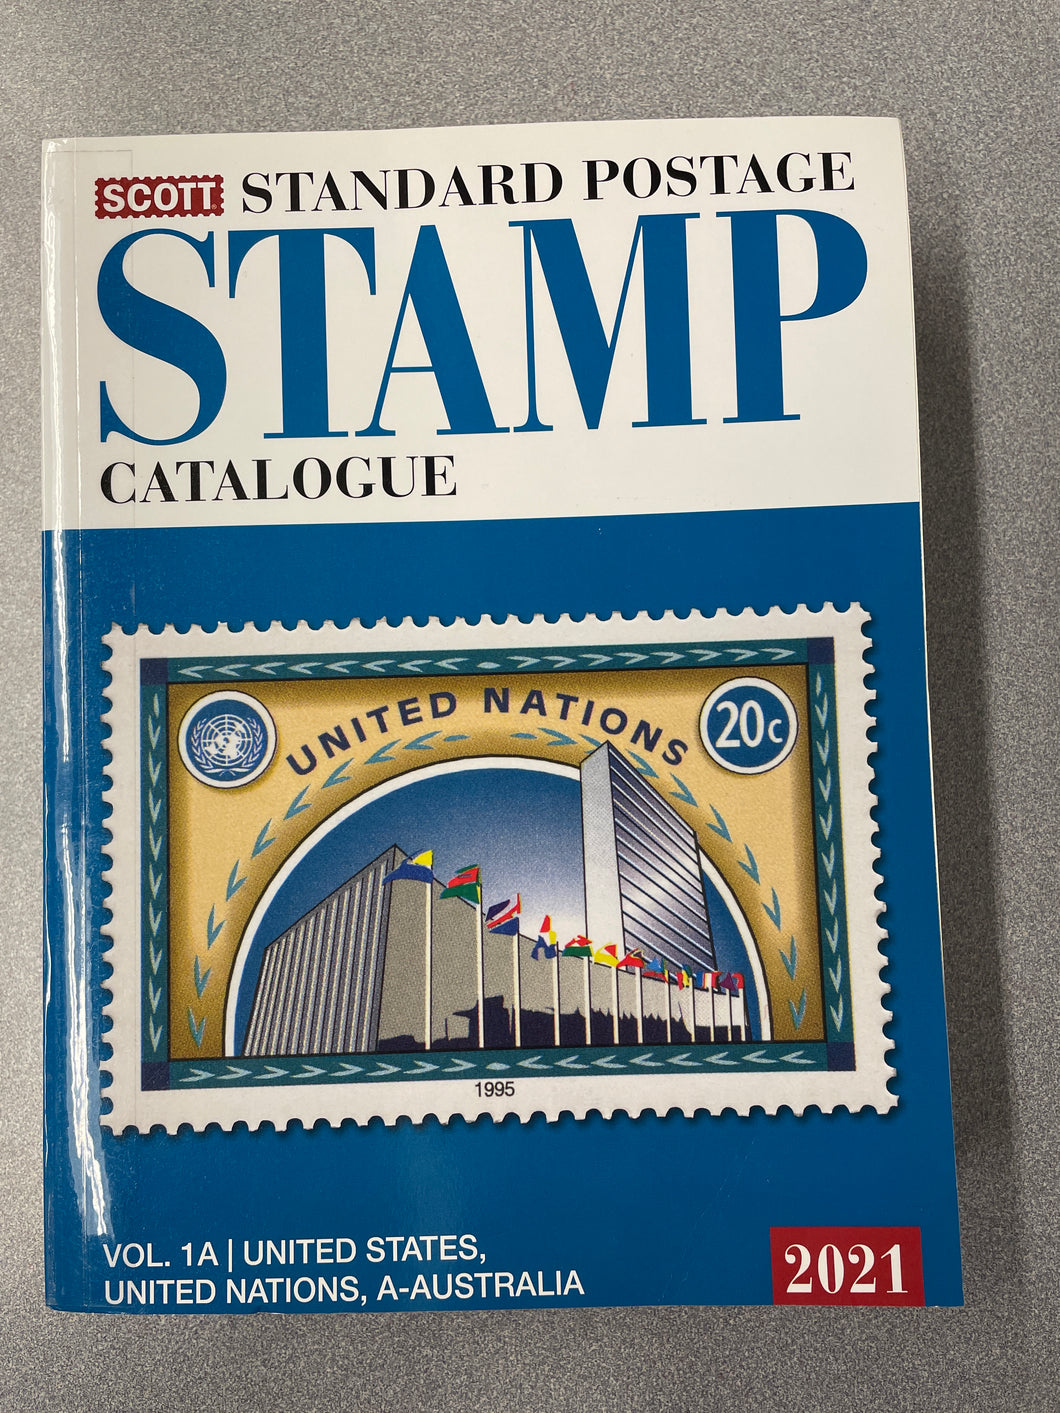 CG  Scott Standard Postage Stamp Catalogue, Vol. 1A and 1B, 2021, Bigalke, Jay, ed. [2020] N 3/24